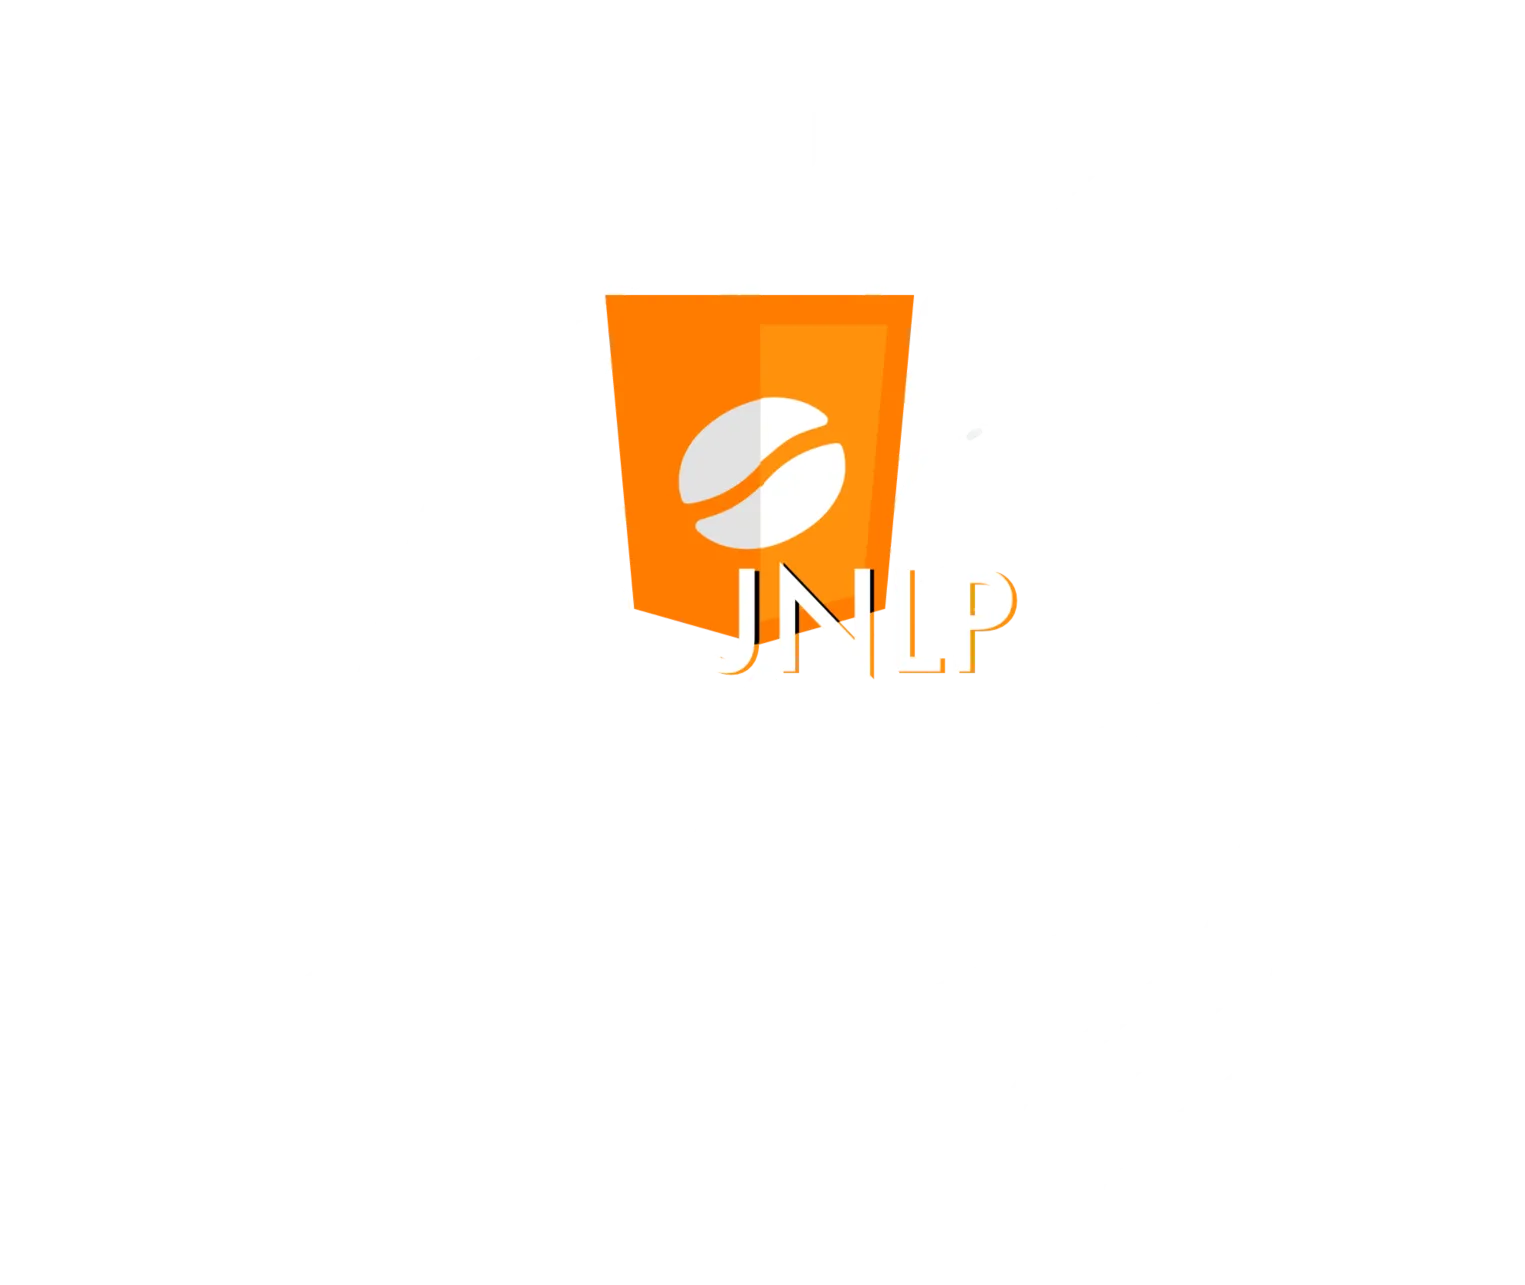 JNLP Runner logo in a tool box